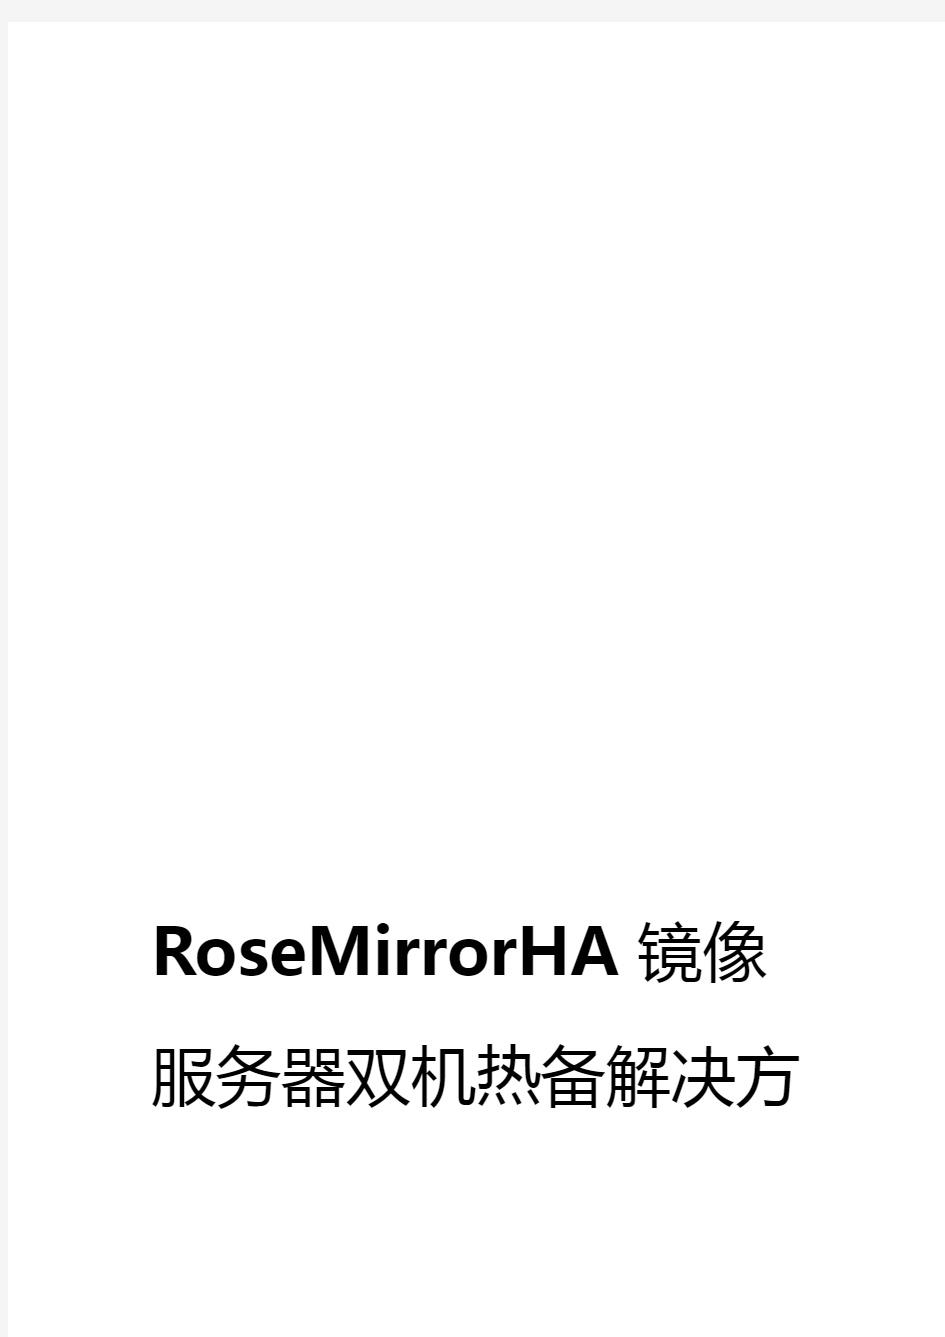 RoseMirrorHA镜像服务器双机热备解决方案及具体配置